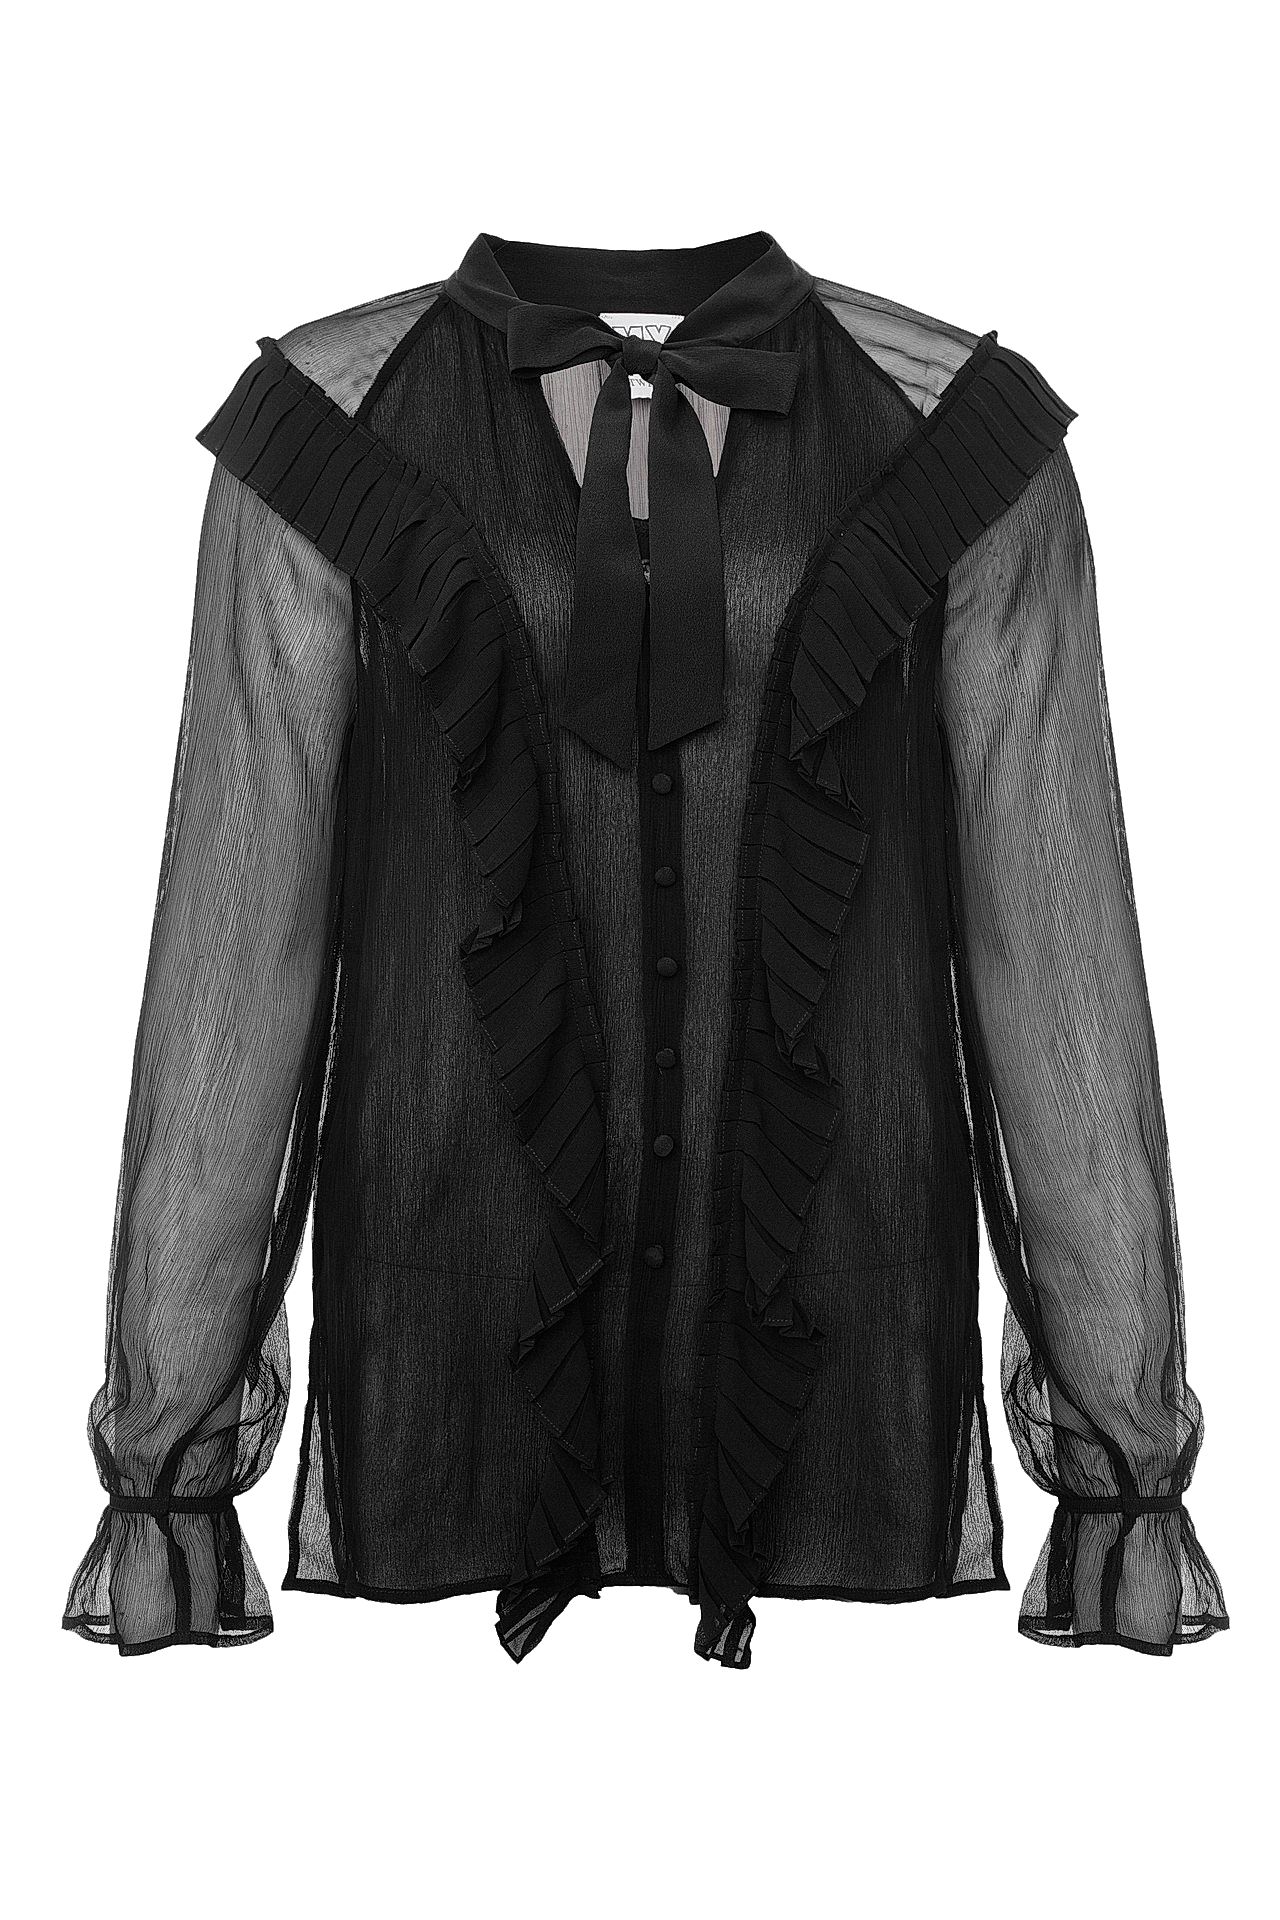 Одежда женская Блузка TWIN-SET (YA72PA/18.1). Купить за 5950 руб.